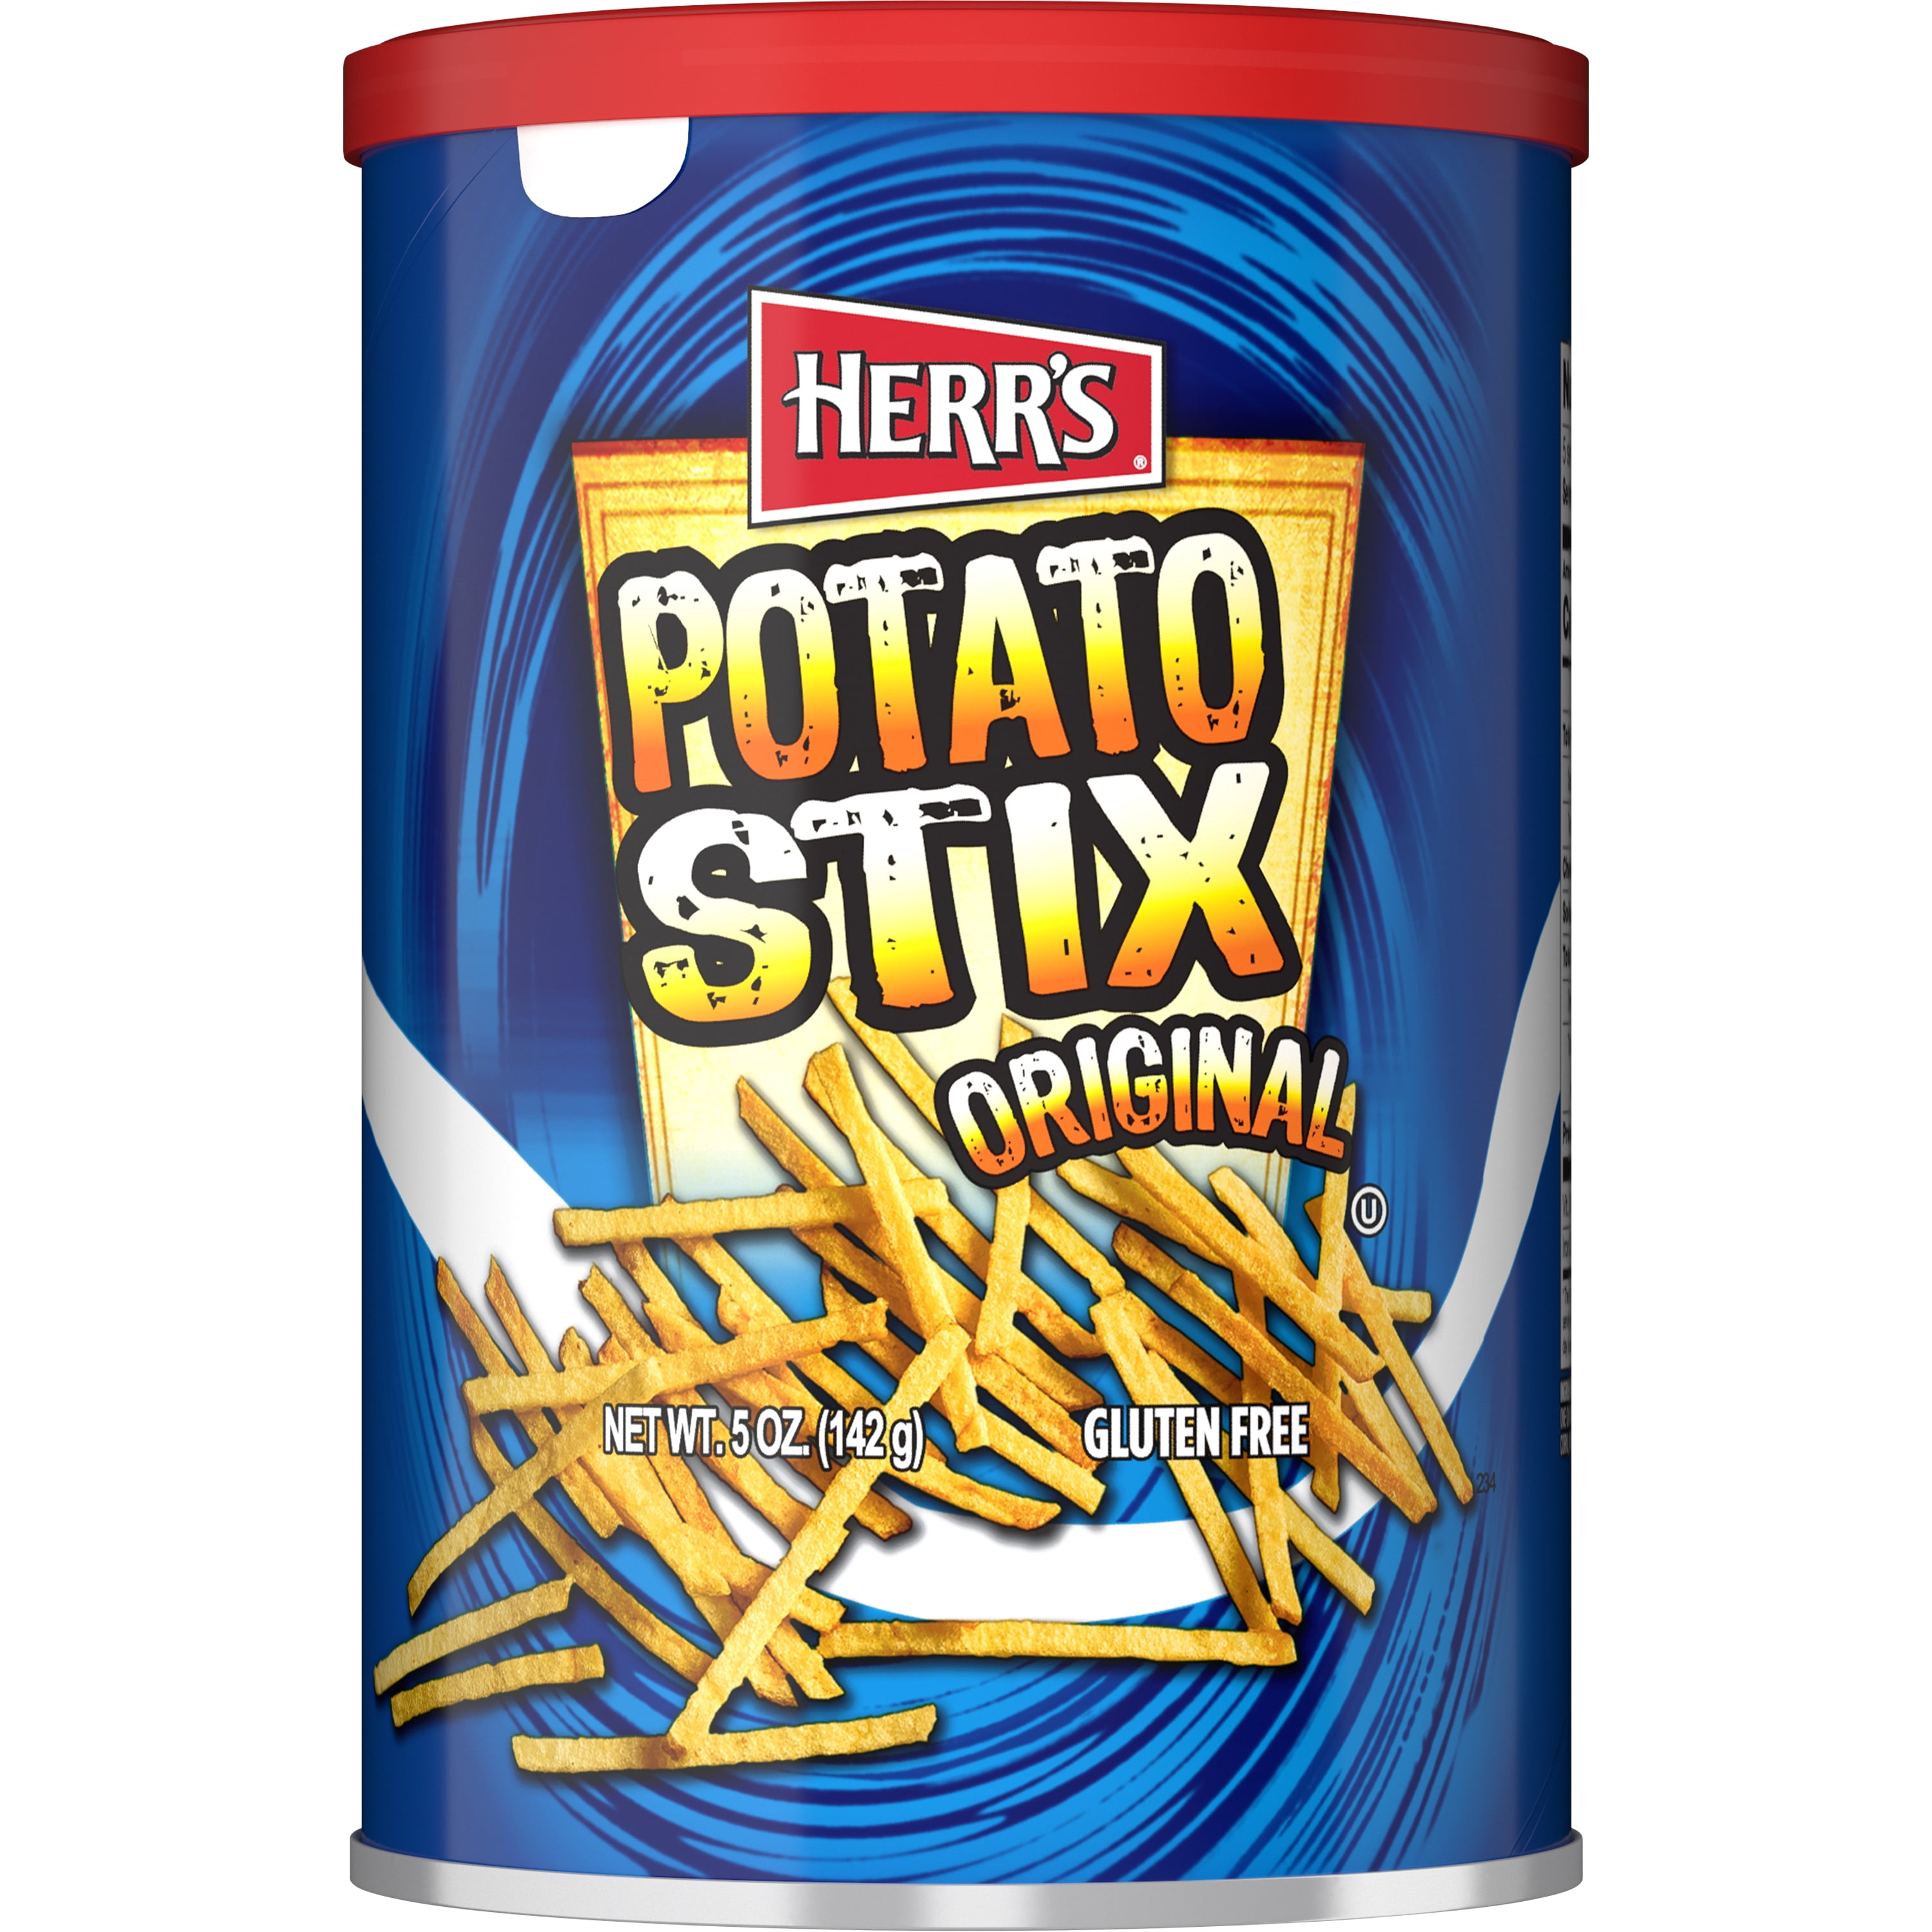 Potato Stix Canister